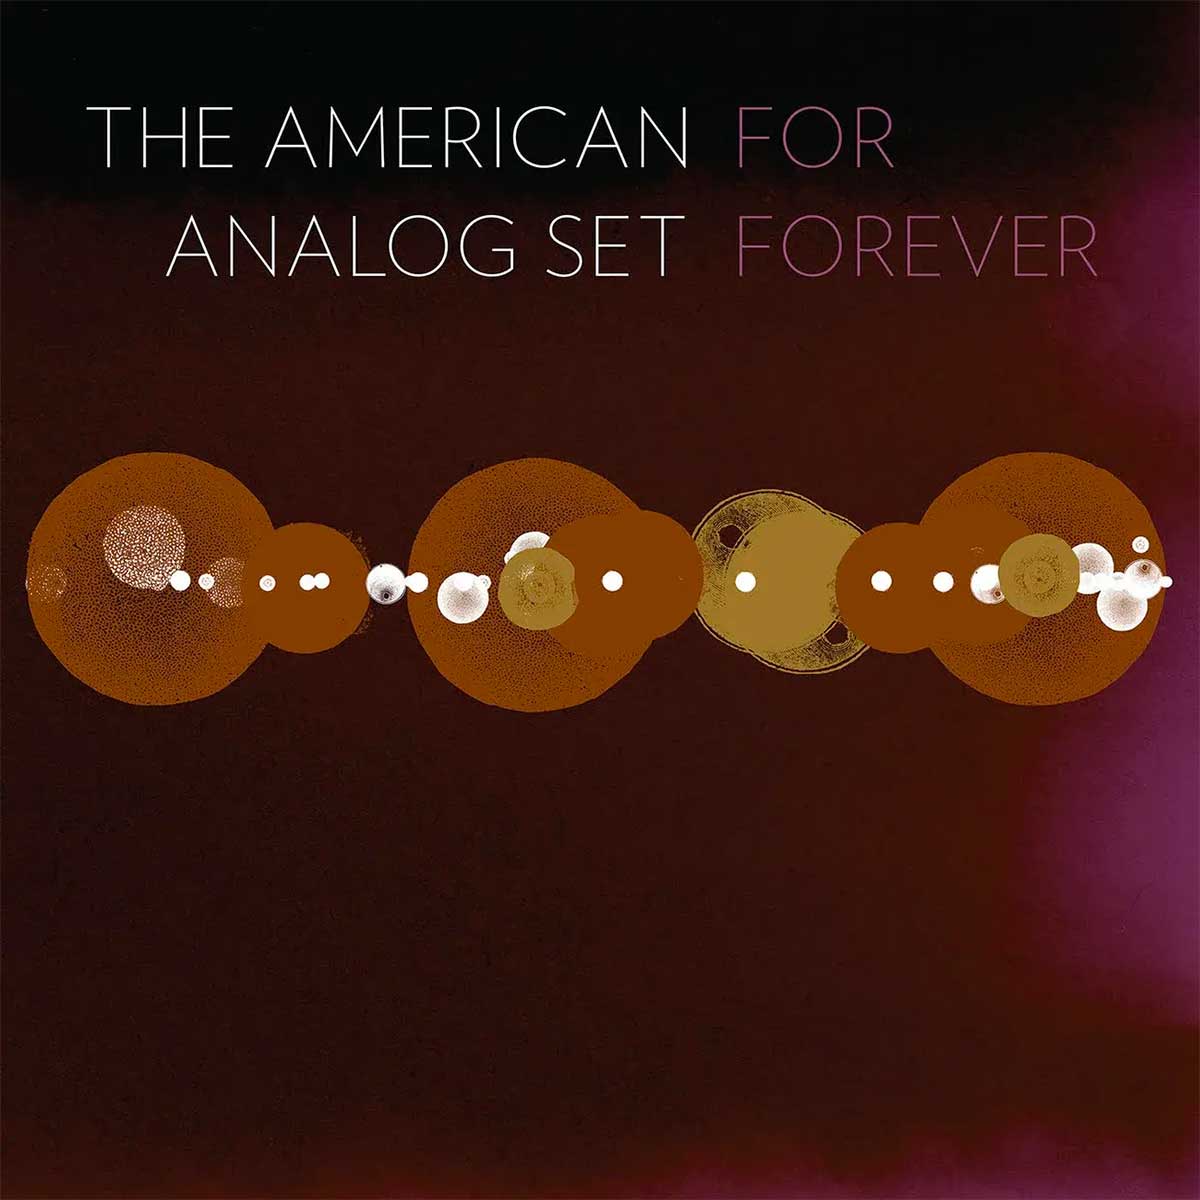 Tapa de For Forever, disco de The American Analog set